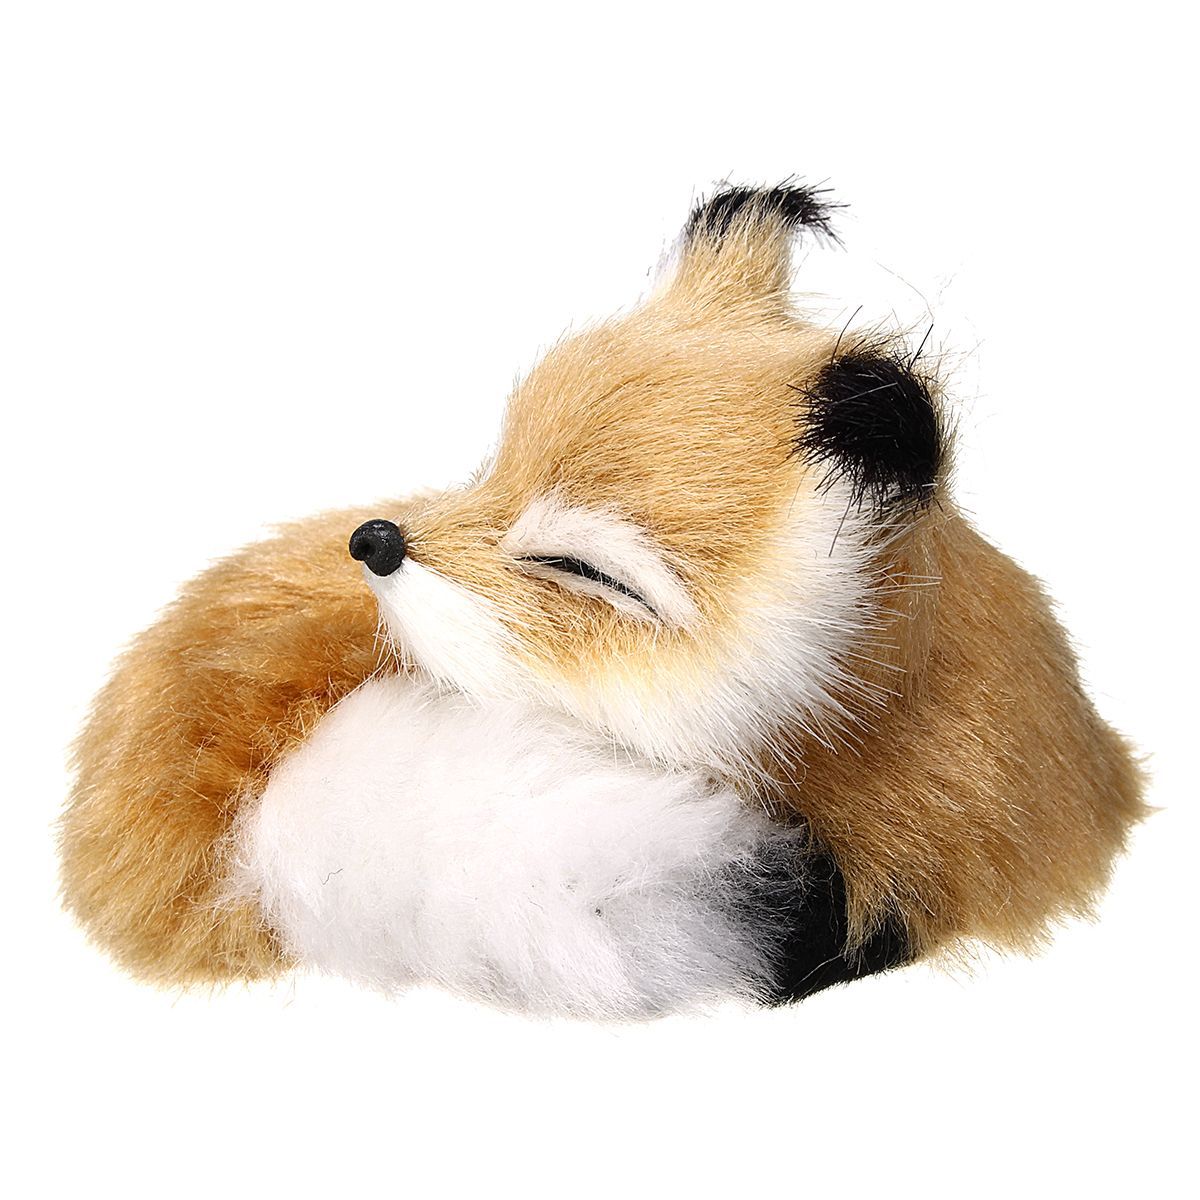 Cute-Plush-Stuffed-Little-Animal-Sitting-Sleeping-Simulation-Toy-Animal-Birthday-Gift-Home-Decoratio-1458409